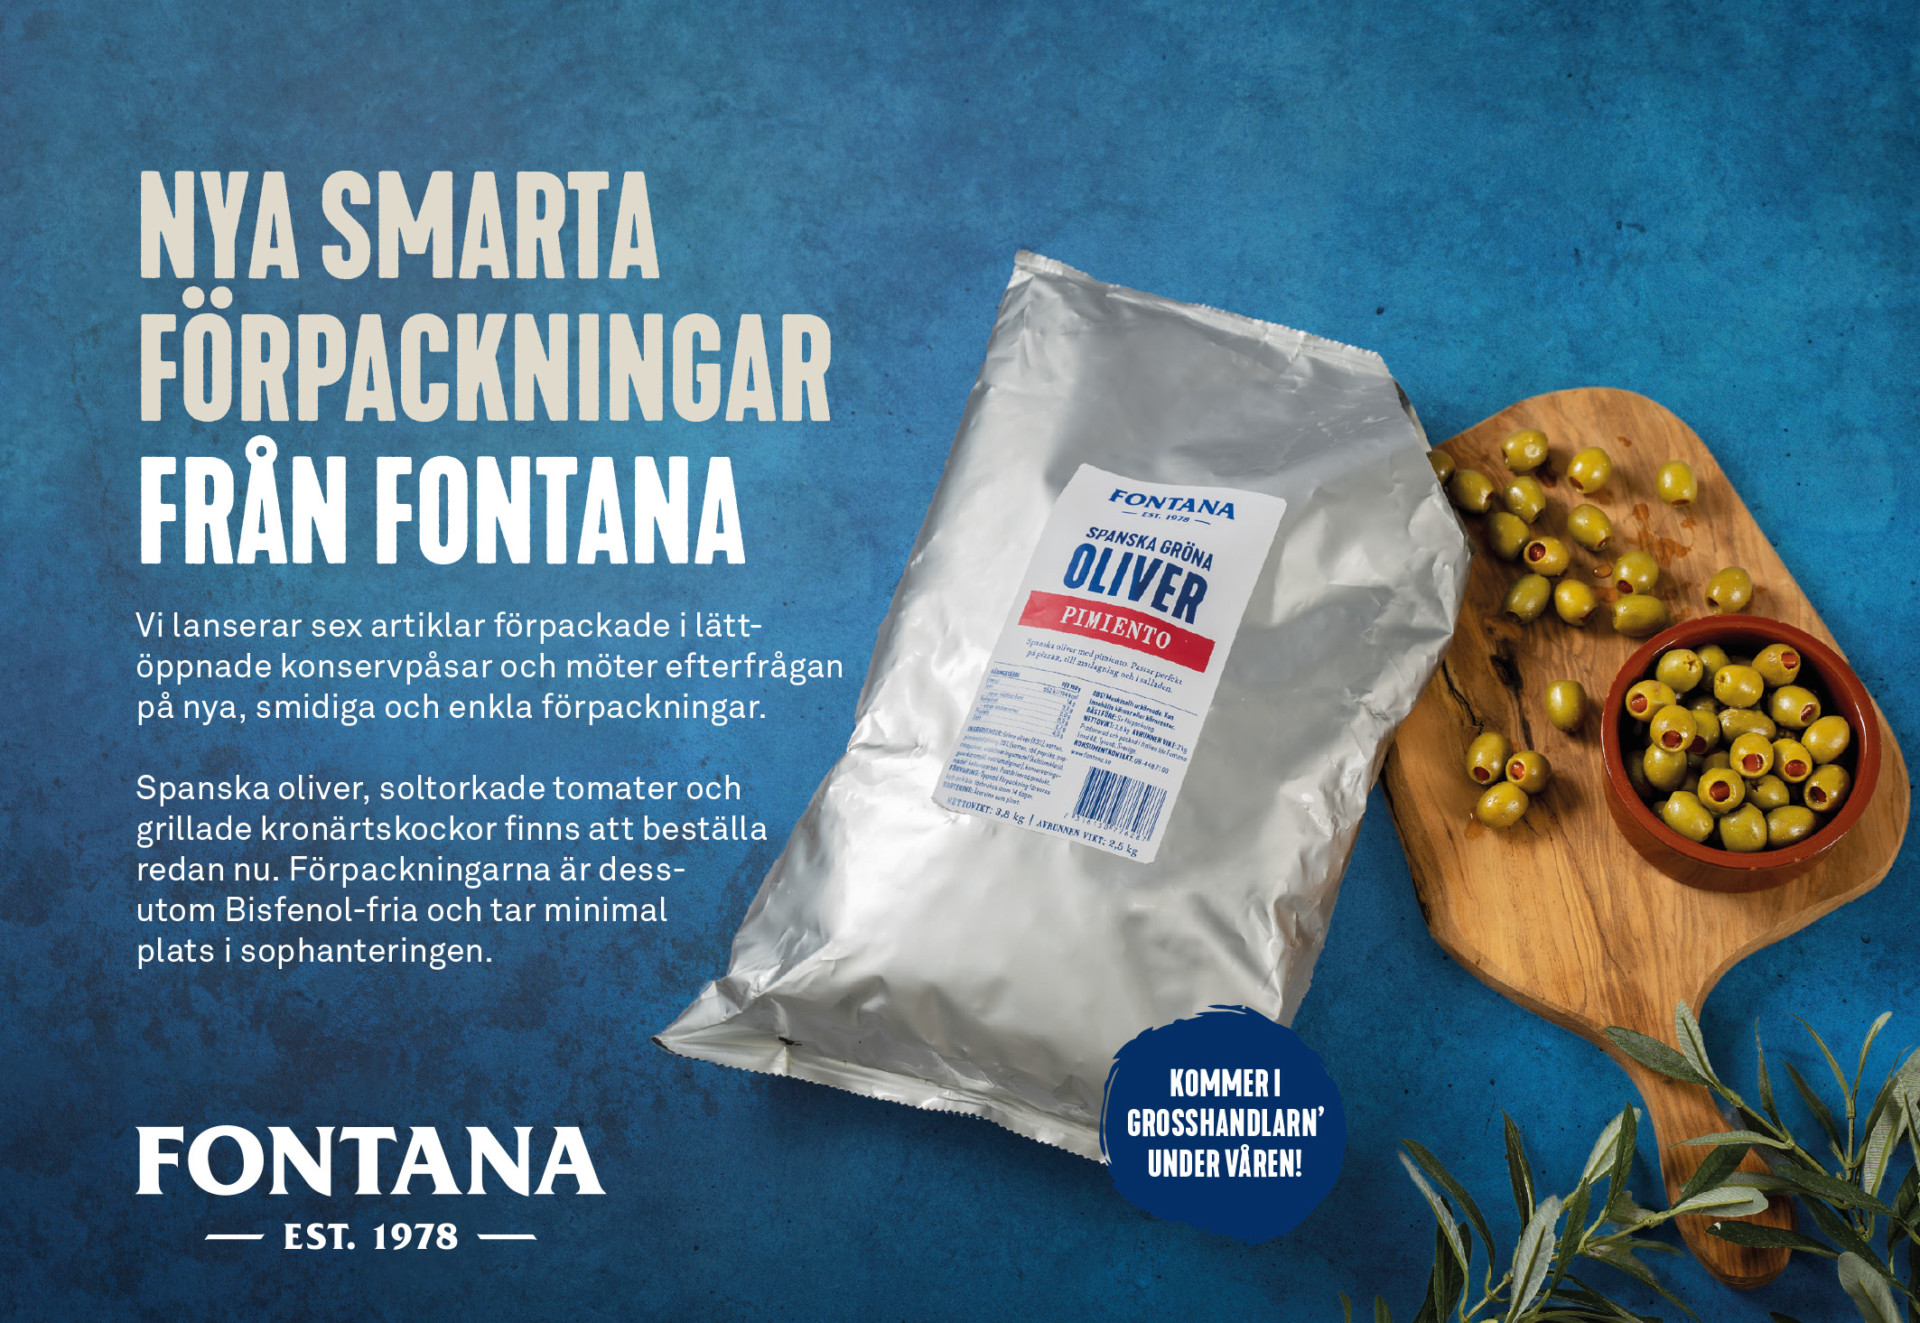 Fontana - Svensk cater - halvsida oliver påse 180x124.indd